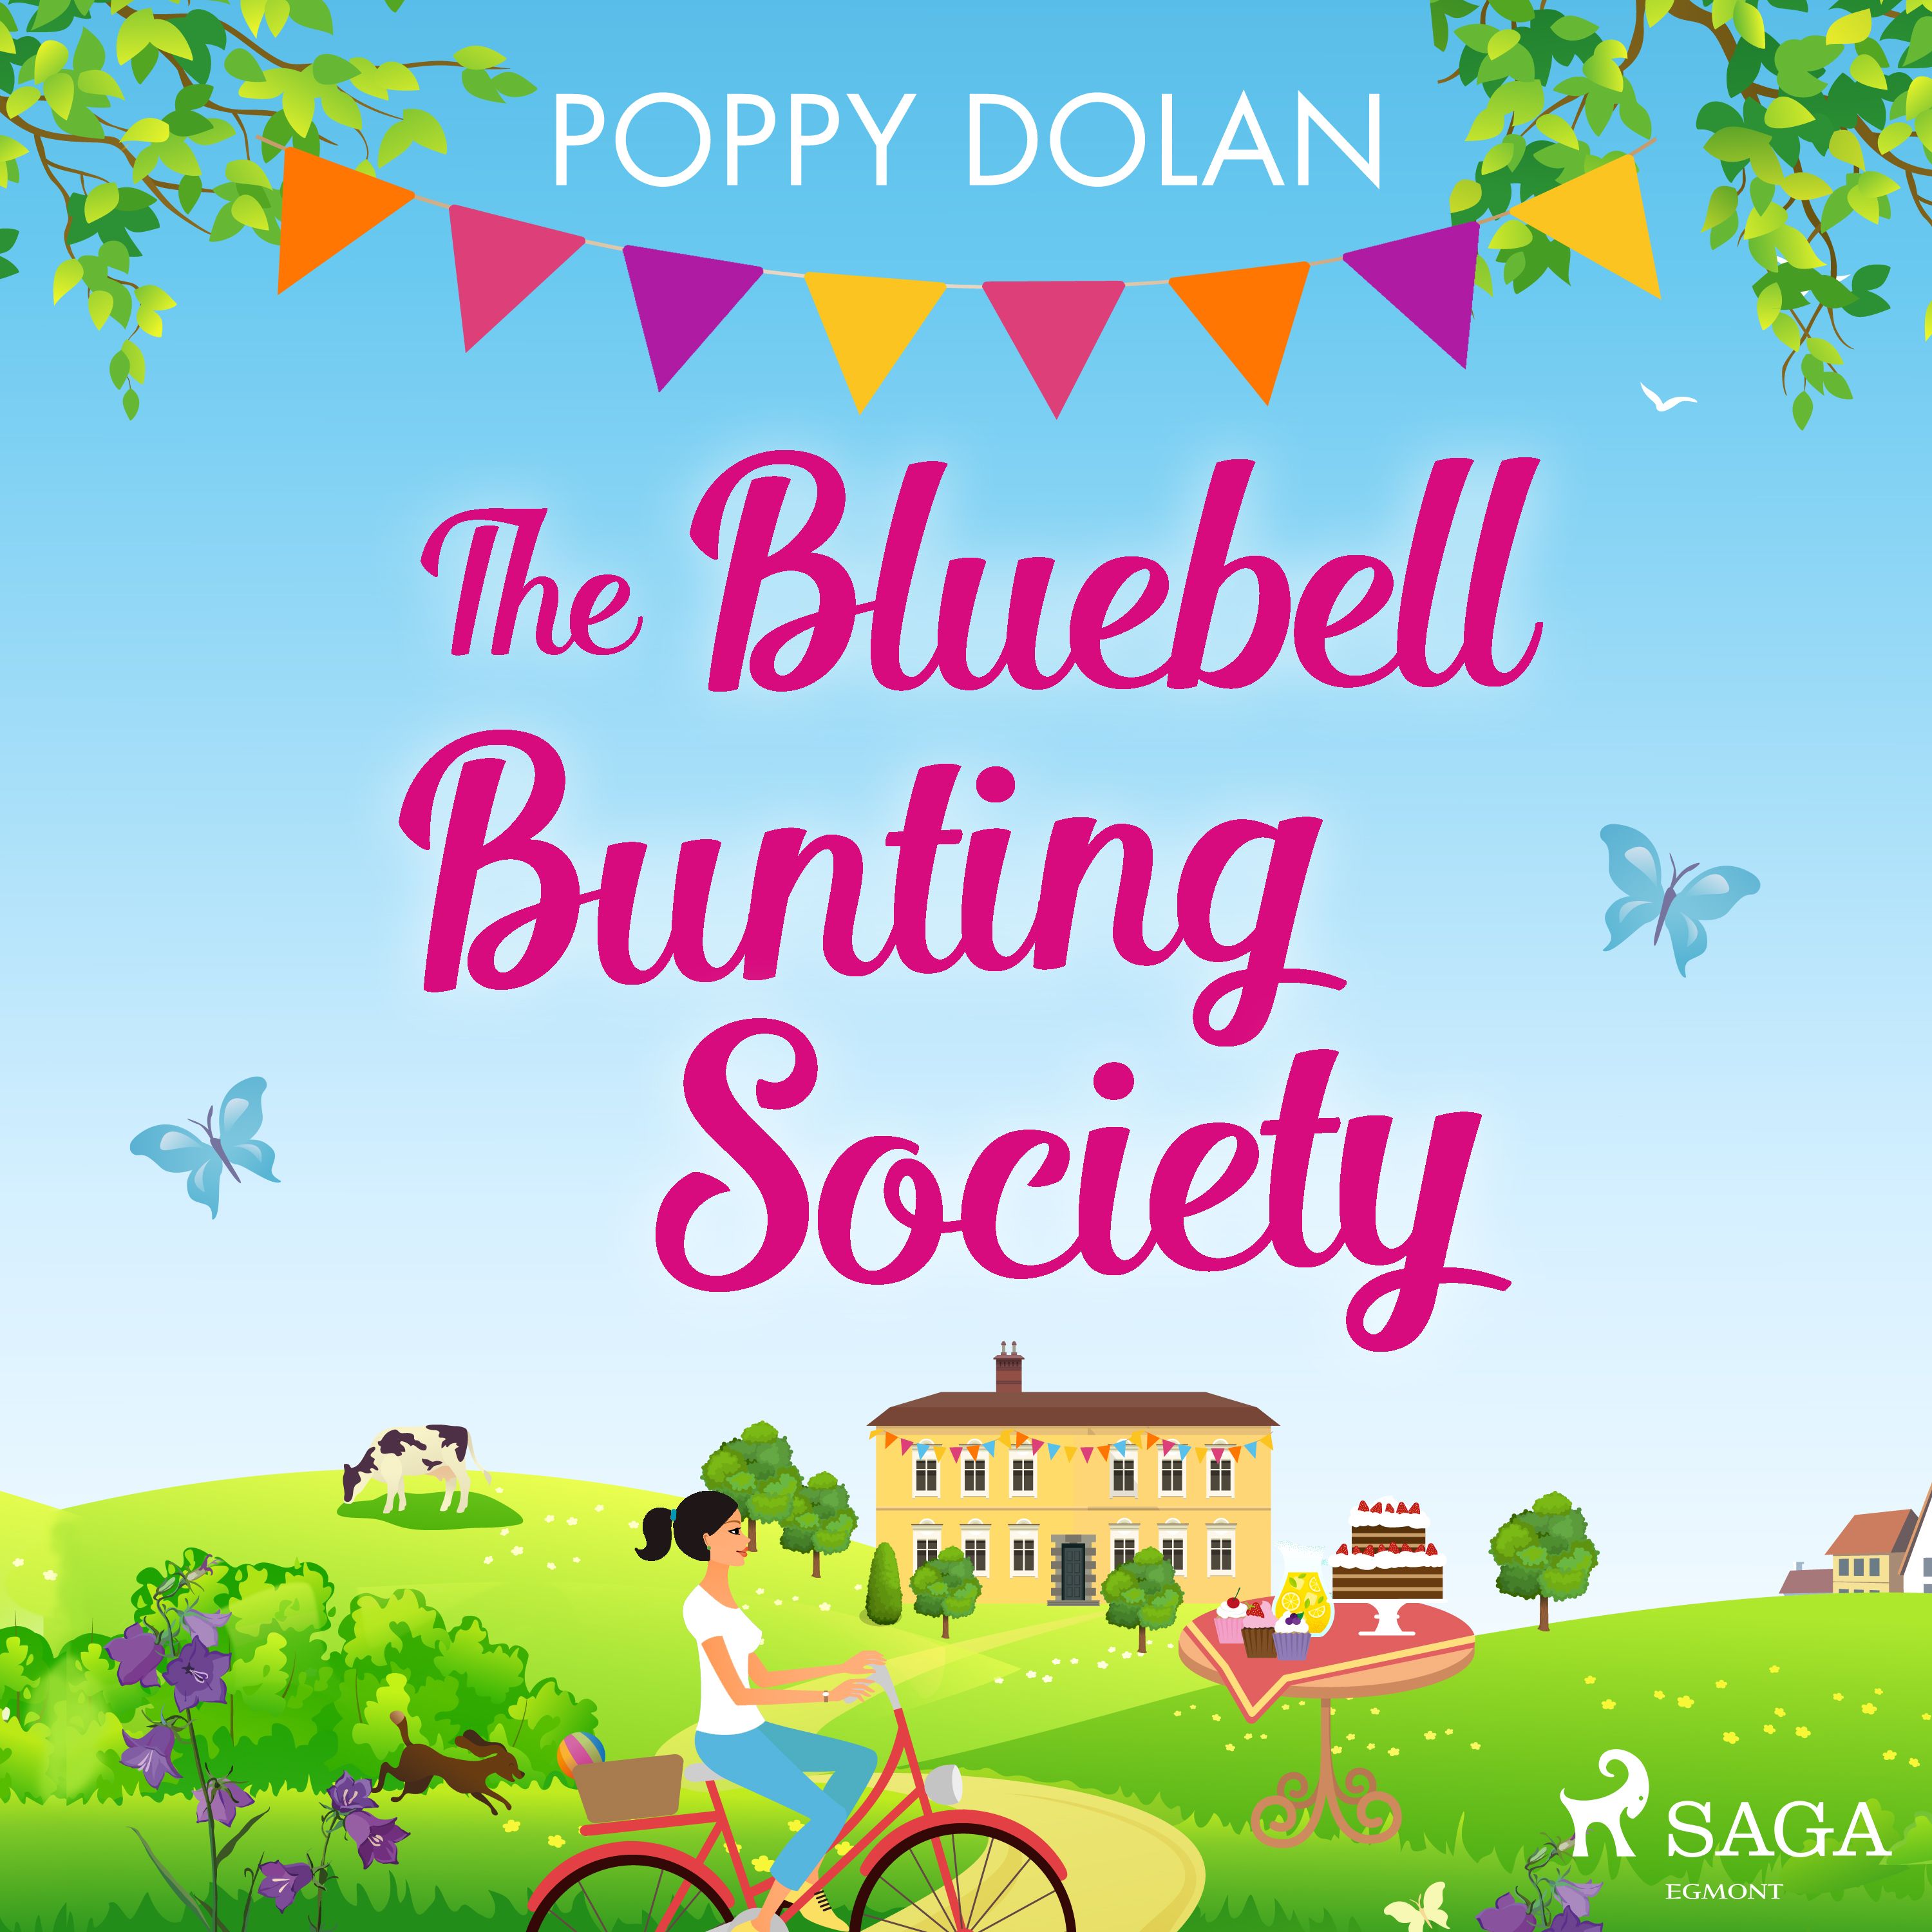 The Bluebell Bunting Society, ljudbok av Poppy Dolan